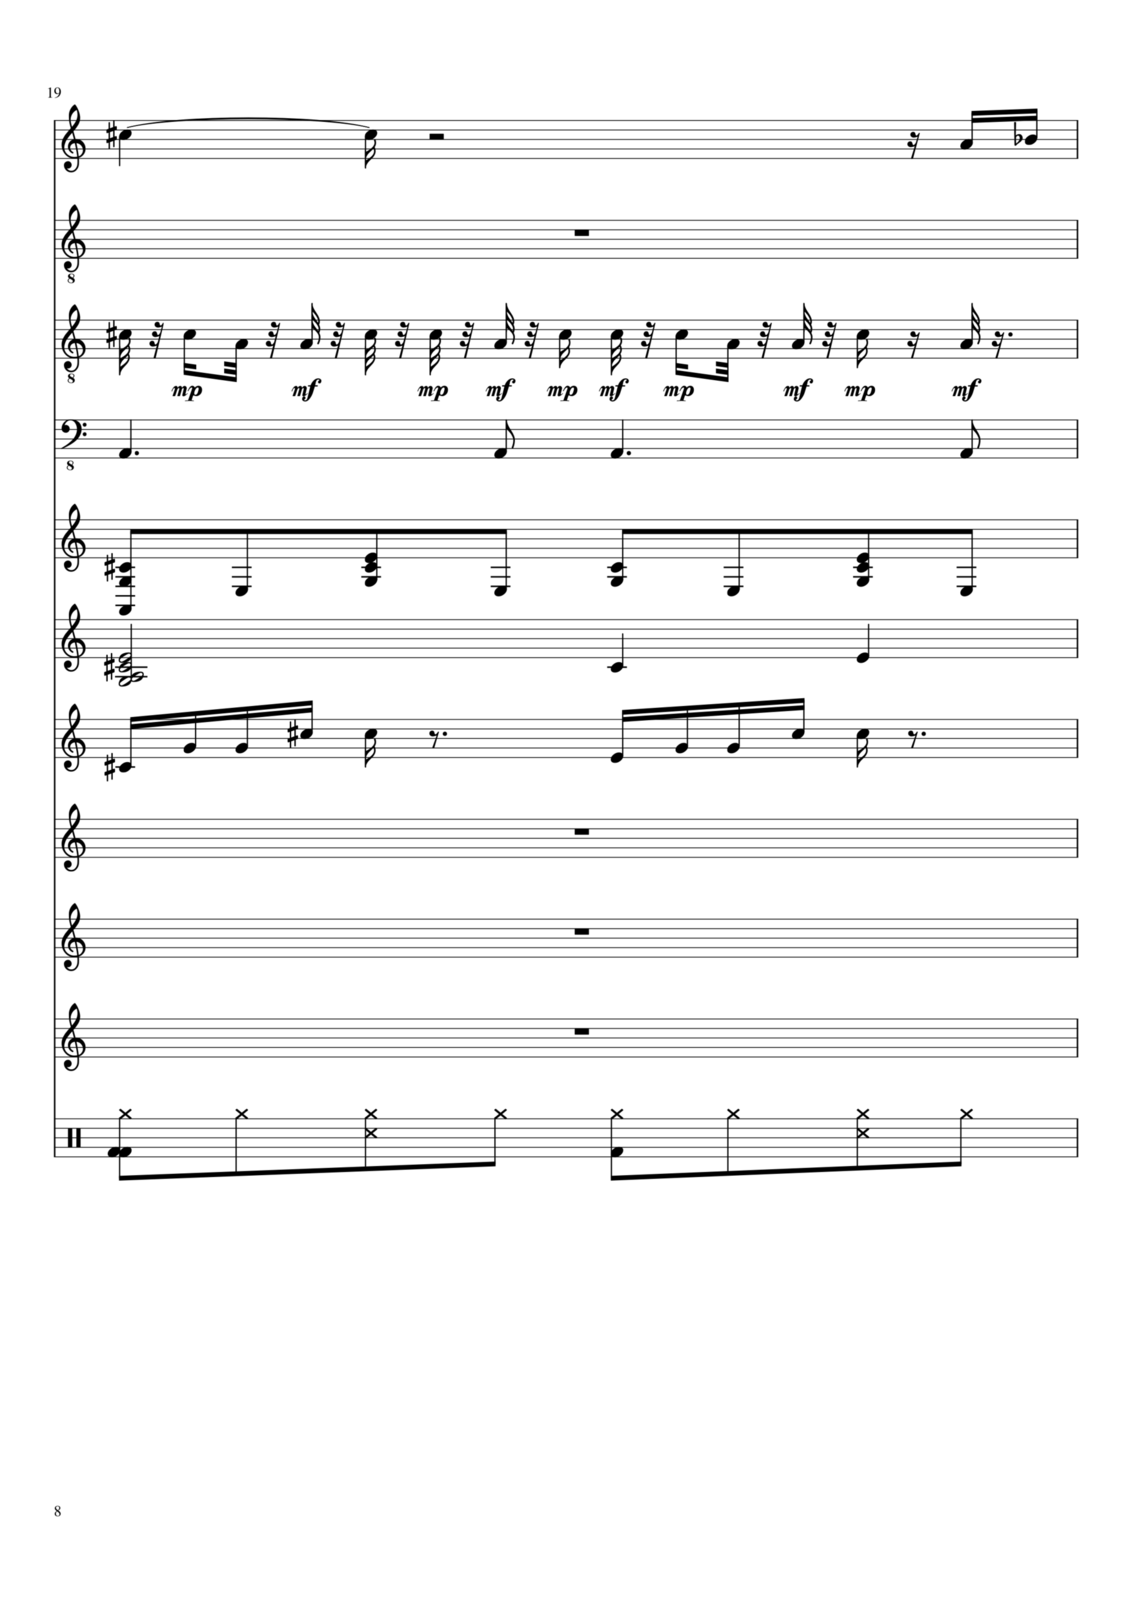 Gorod, kotorogo net slide, Image 8